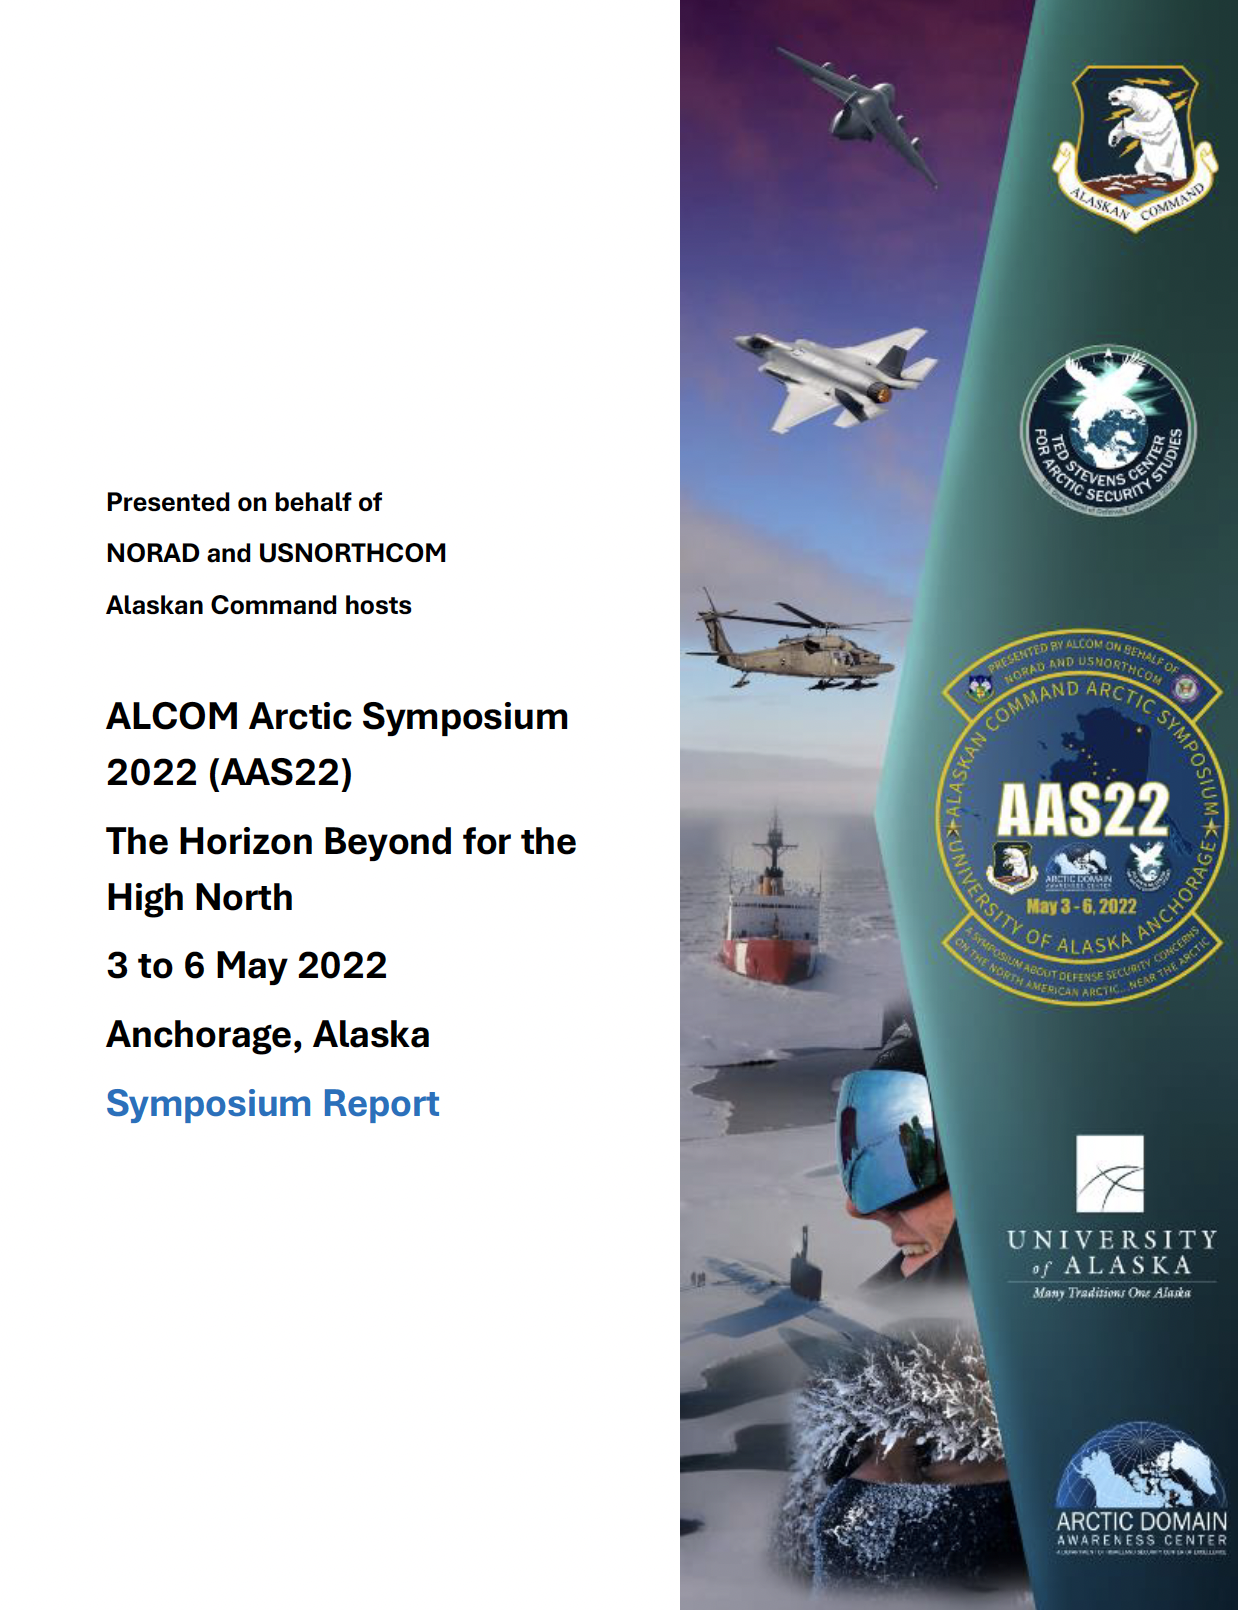 ALCOM Arctic Symposium 2022 Report cover page image.